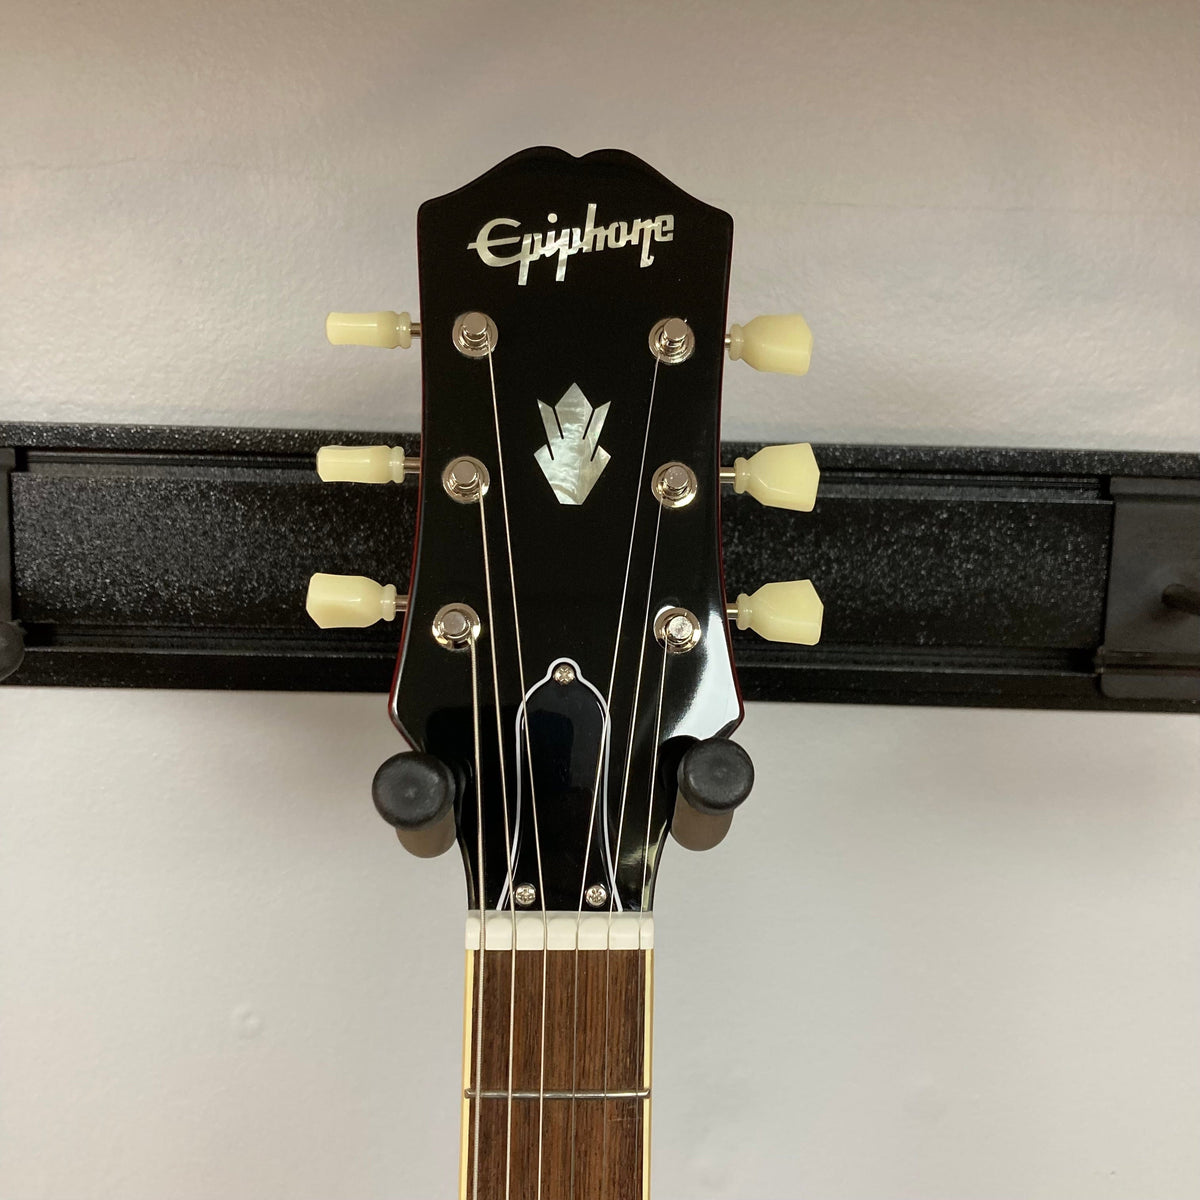 Epiphone ES-335 Semi-hollowbody Electric Guitar - Cherry